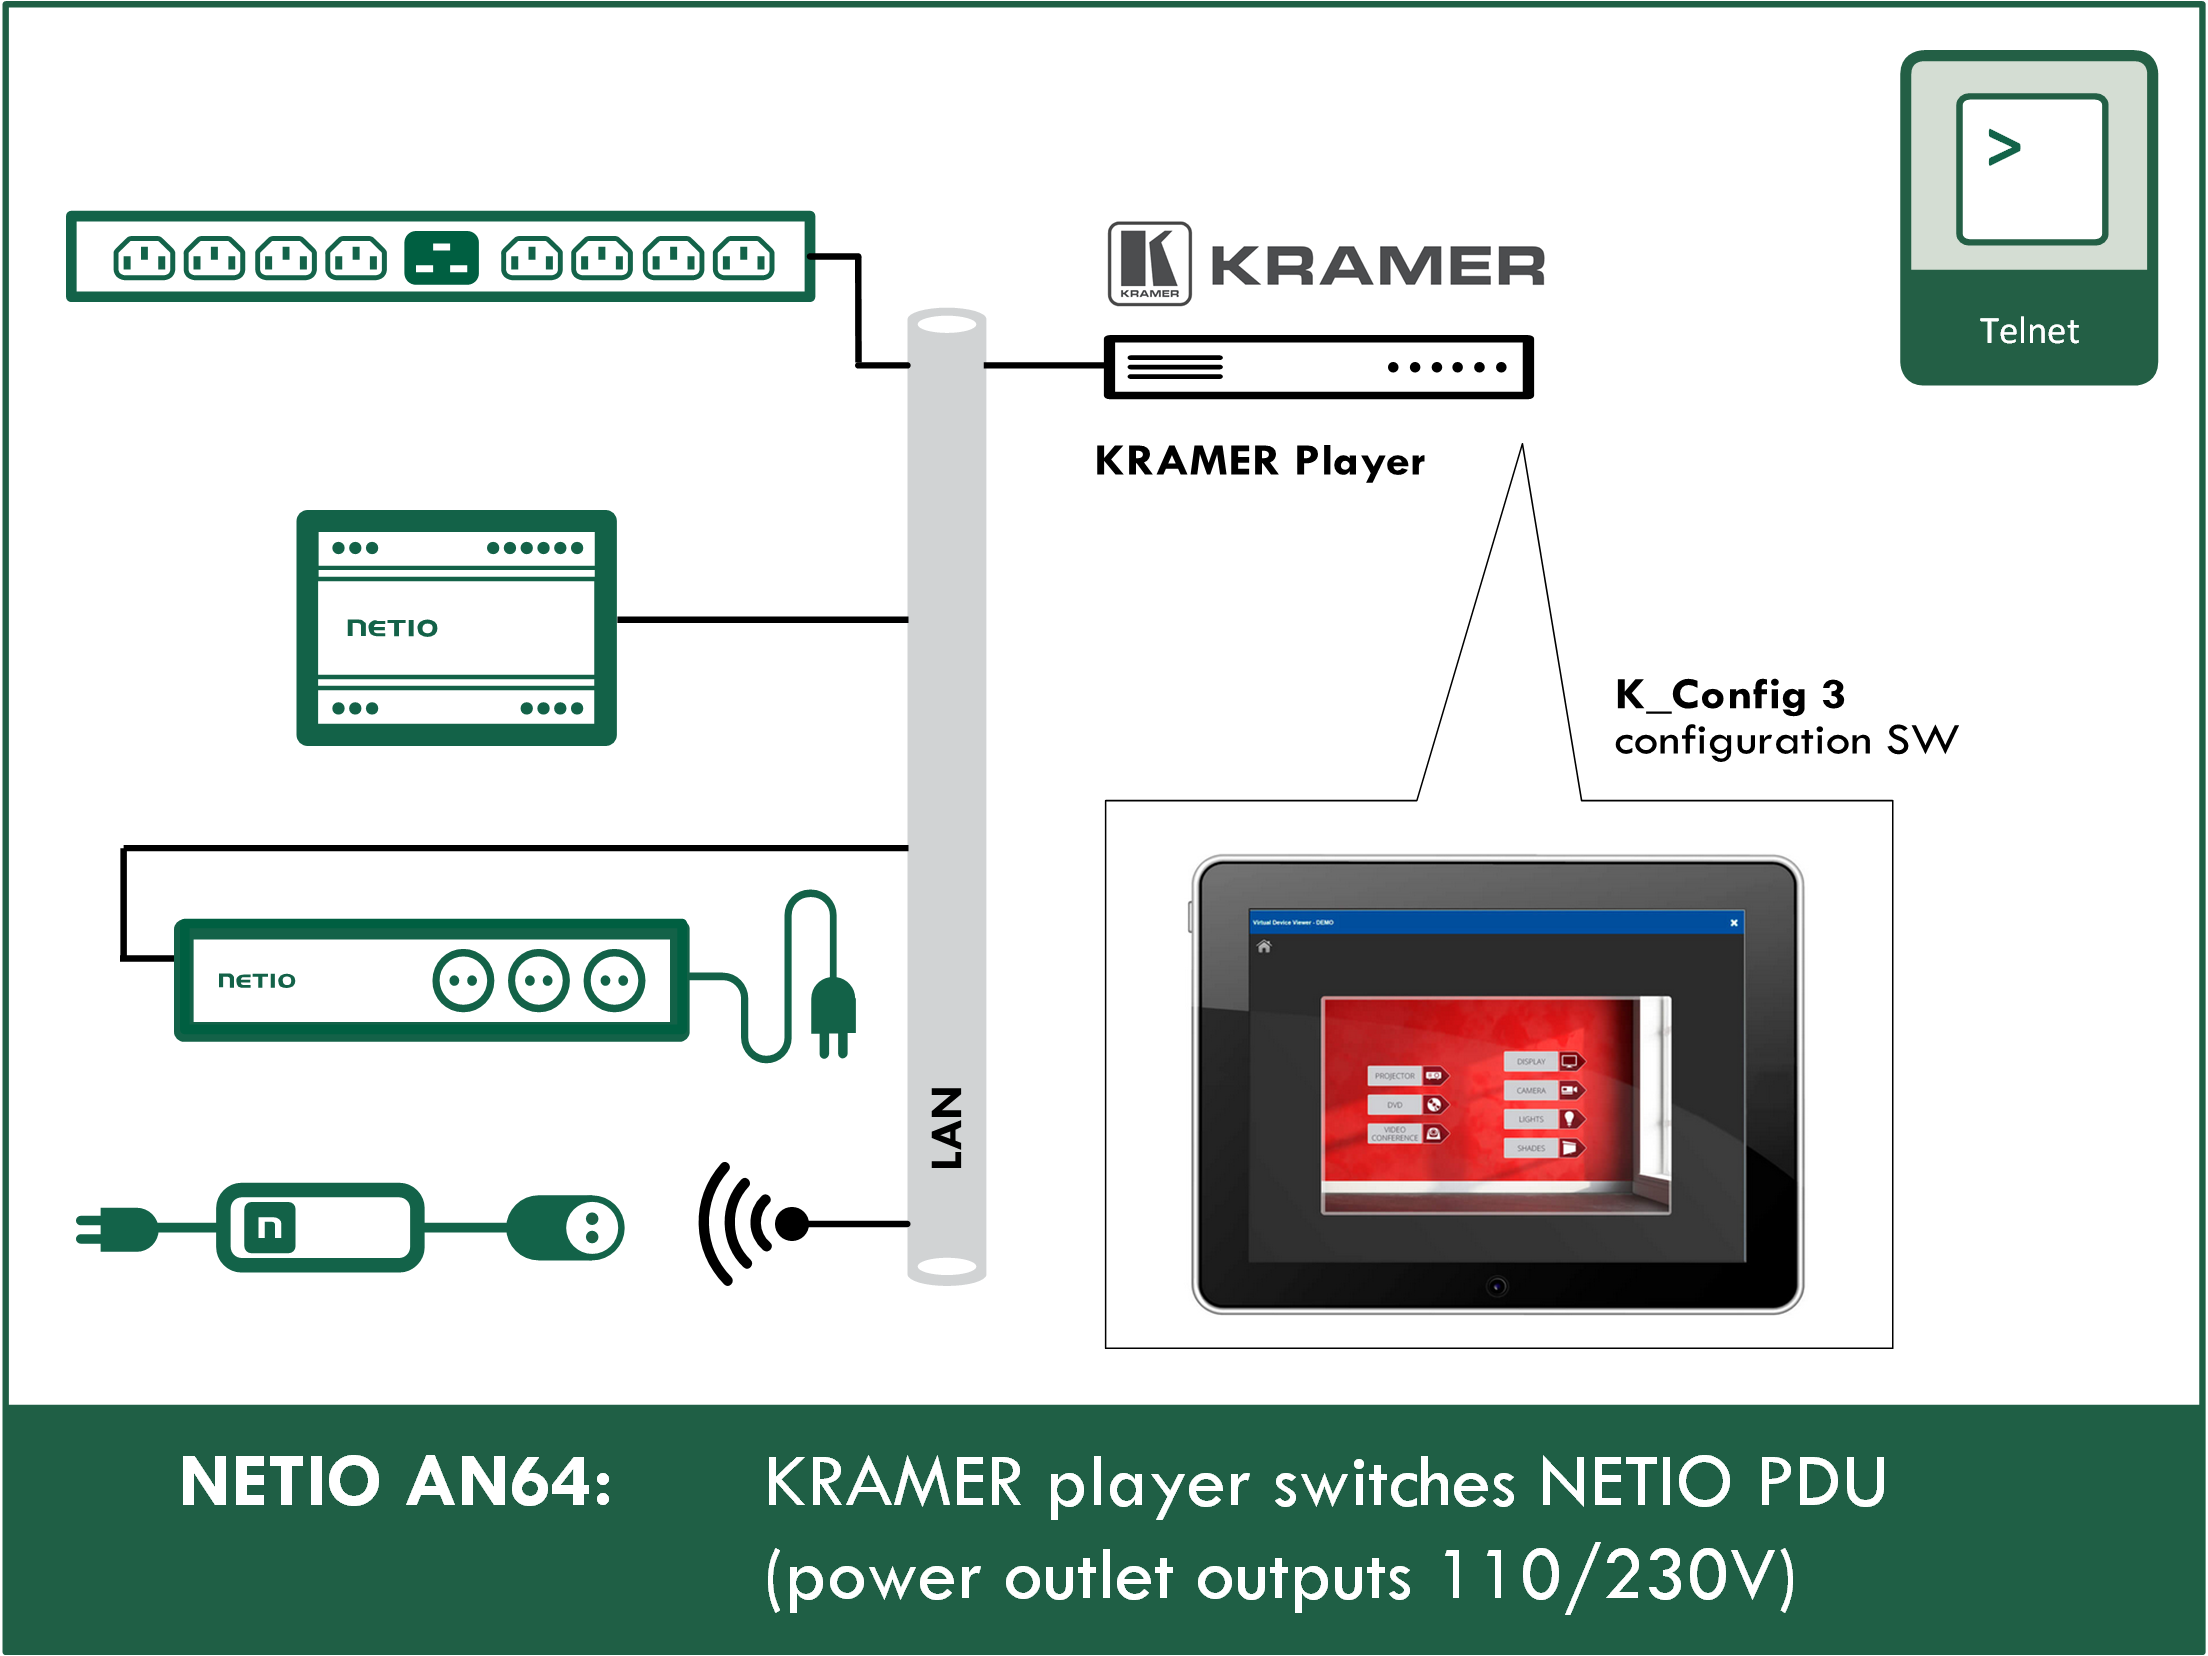 The KRAMER player control NETIO PDU (Power Outputs 110/230V)